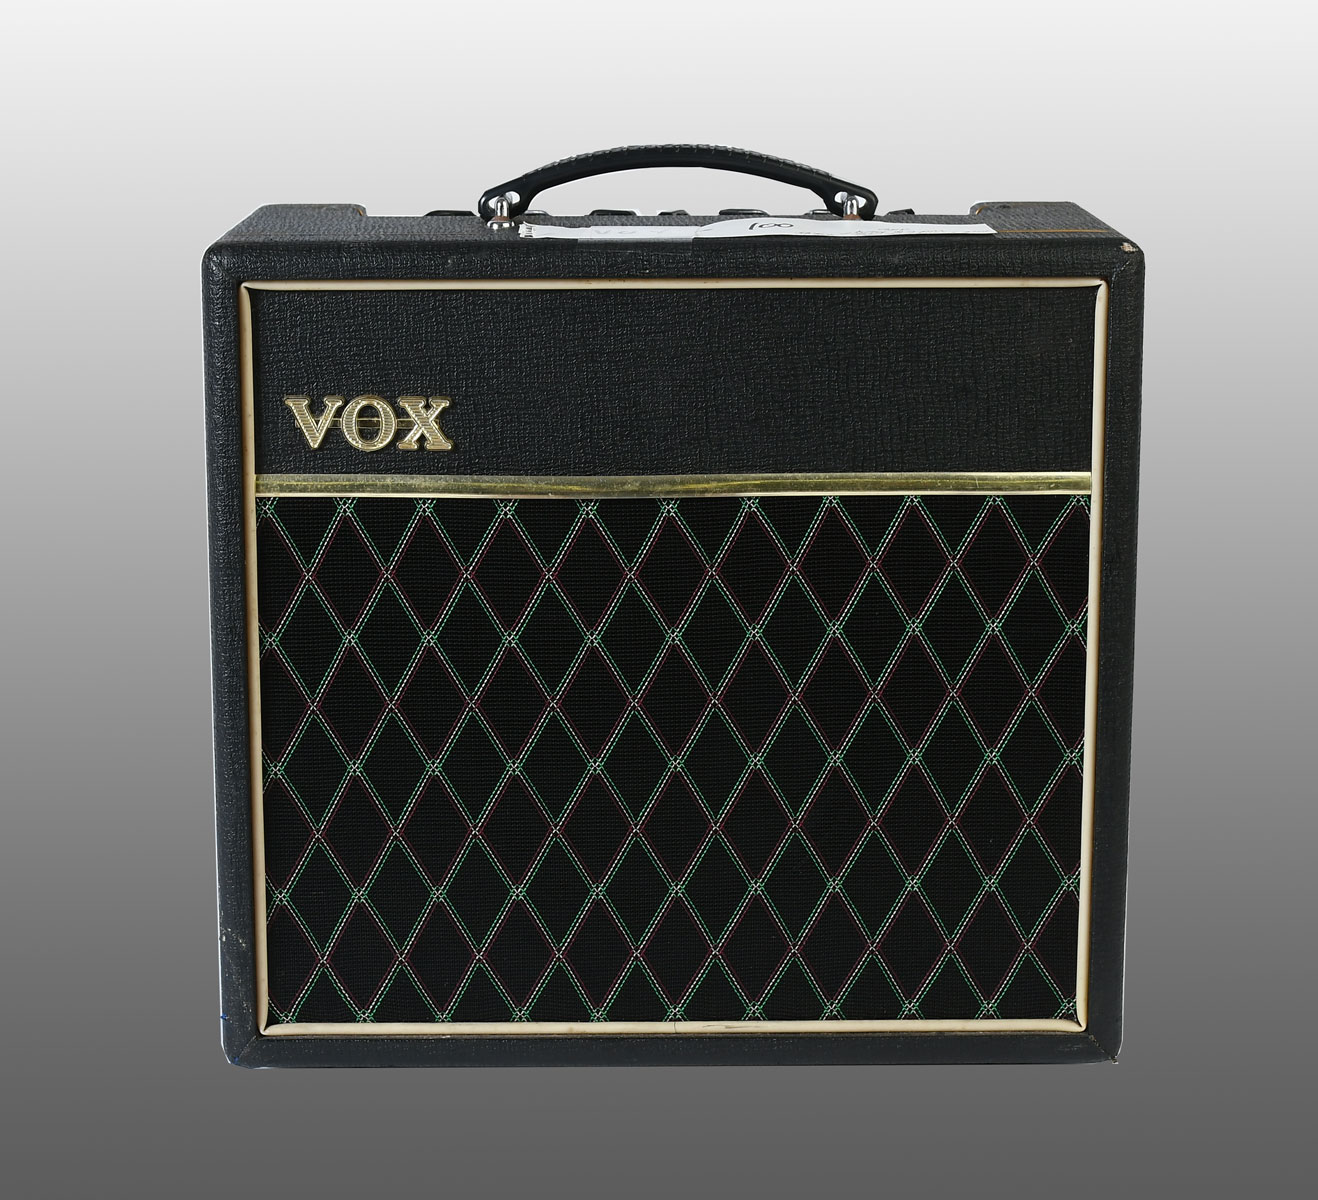 VOX PATHFINDER GUITAR AMP: 15 R